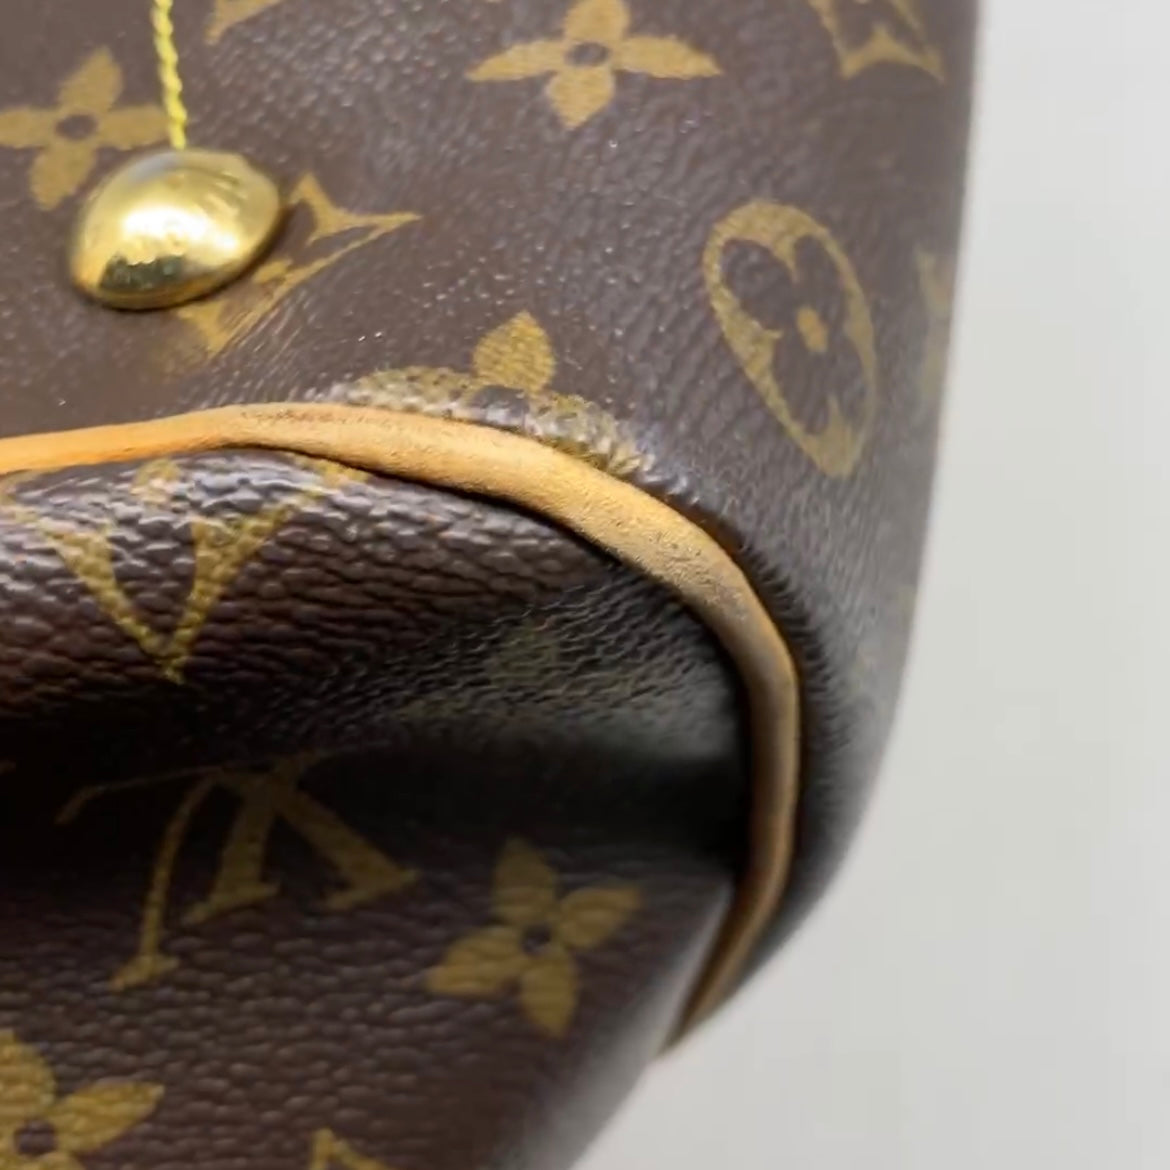 Louis Vuitton tivoli Pm size , year - Second hand brands